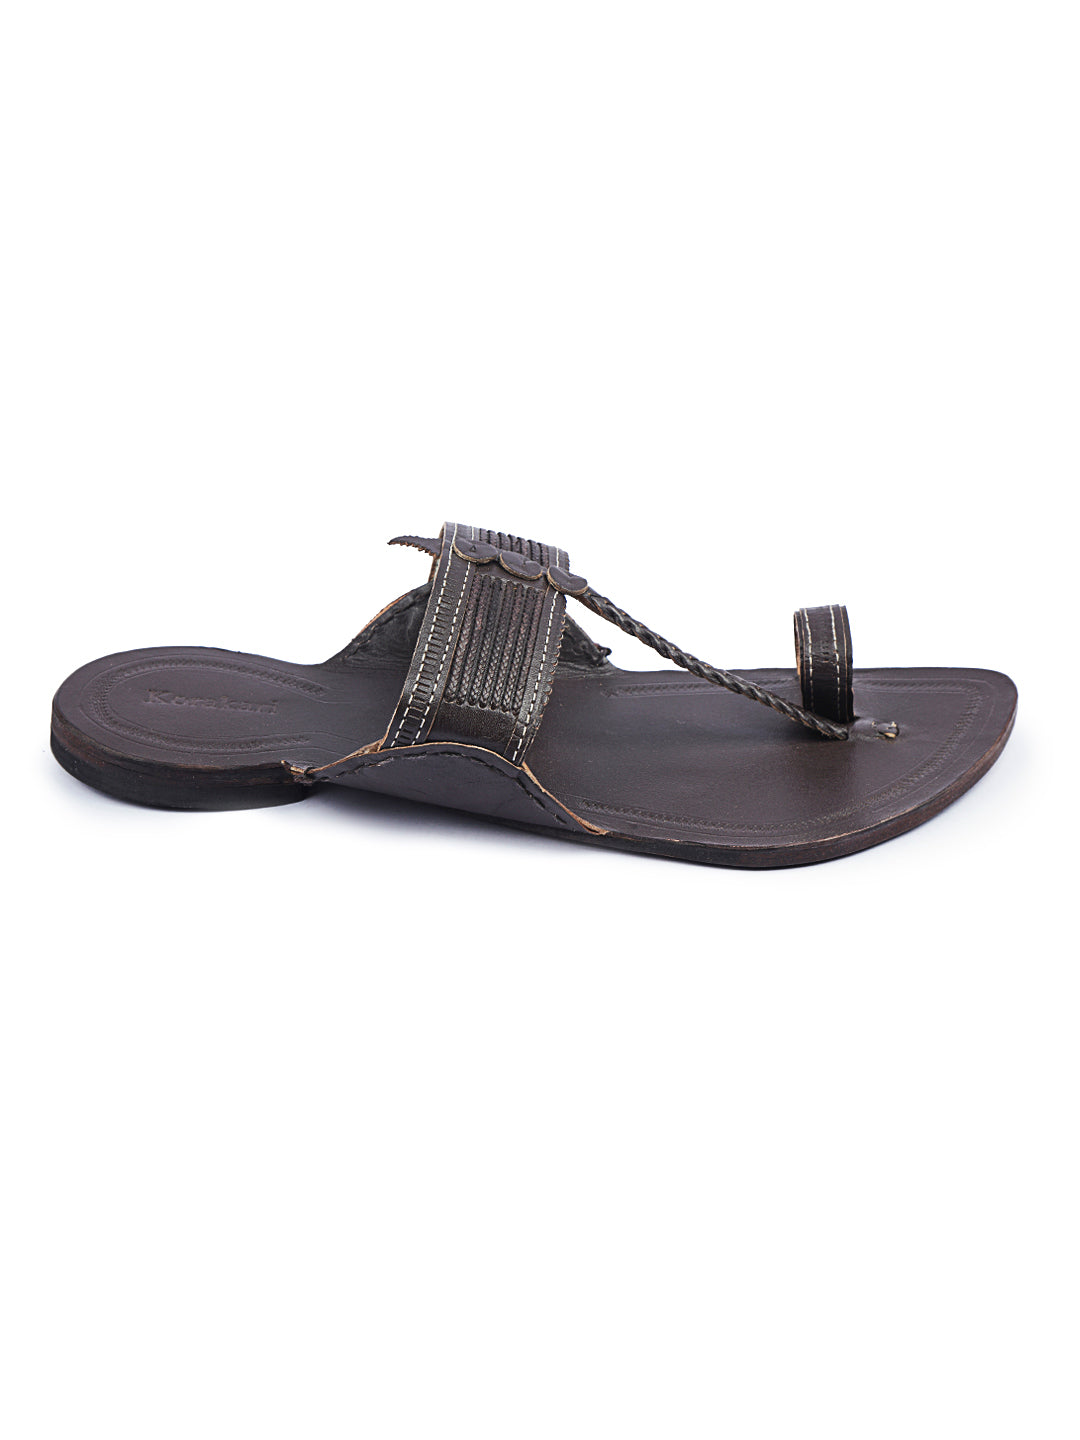 Buy Kolhapuri Chappal & Sandals Online In India | Myntra